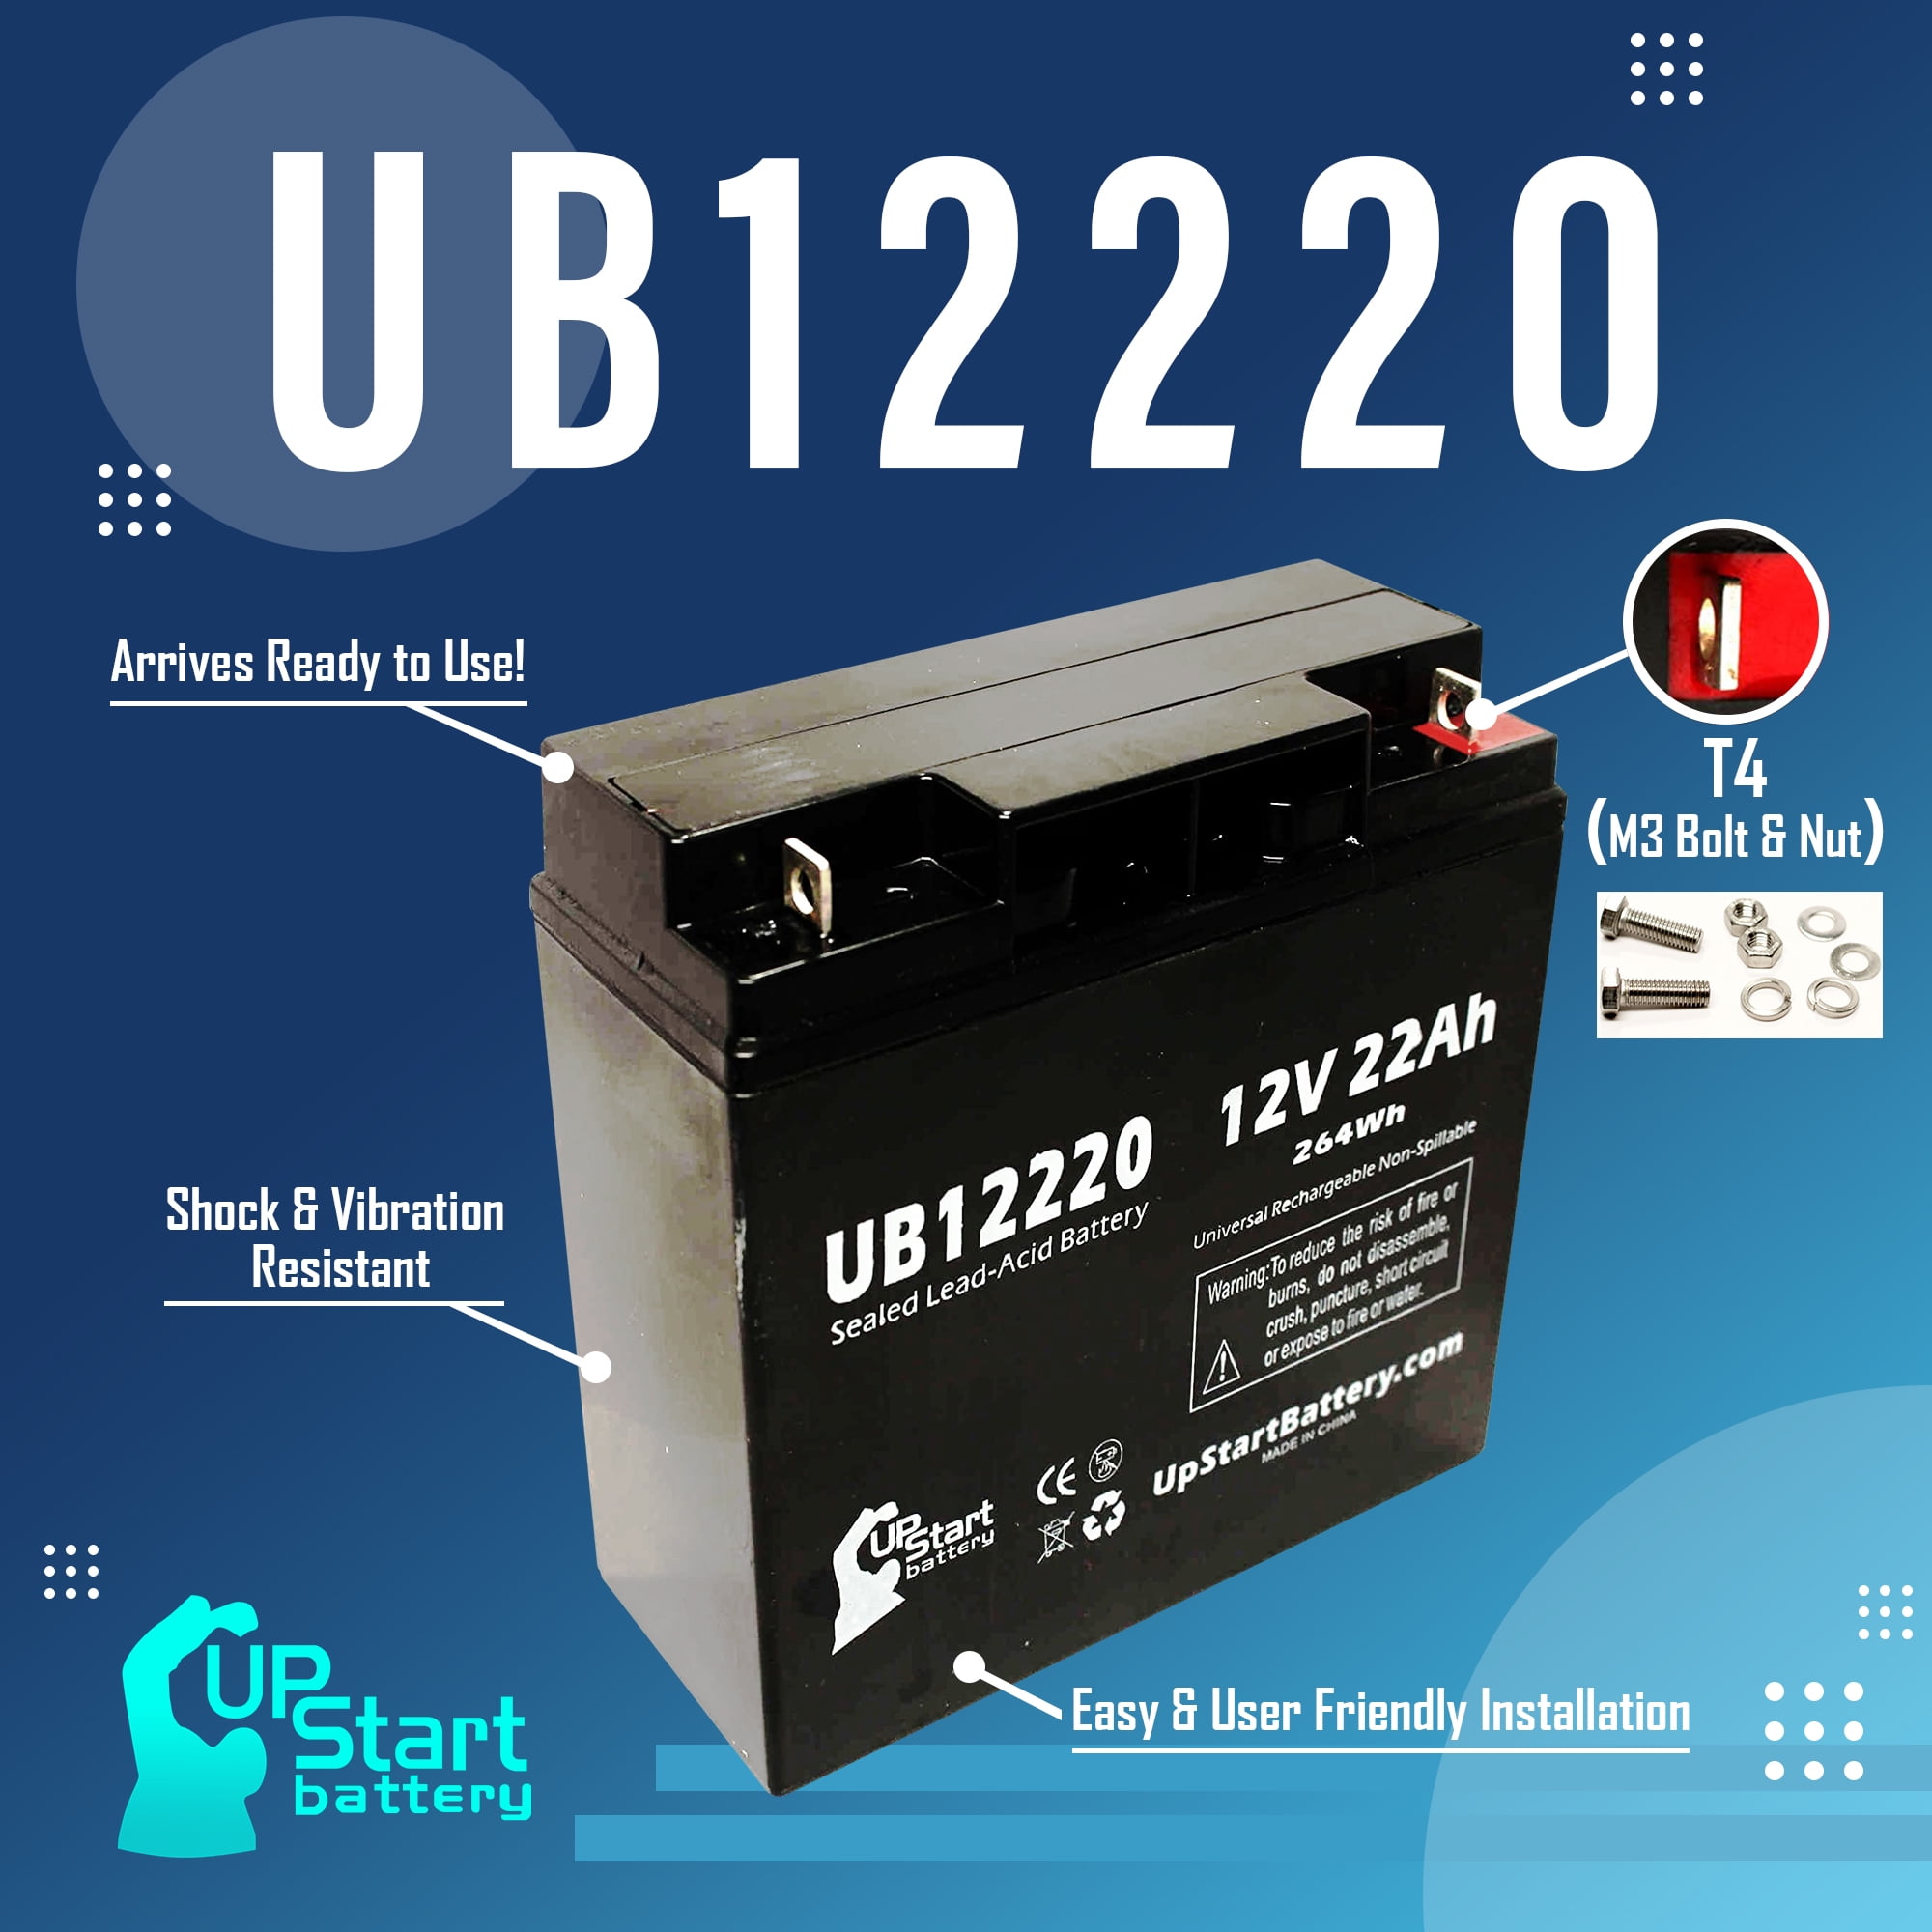 12V 150Ah Batterie au plomb (AGM), B.B. Battery BPL150-12